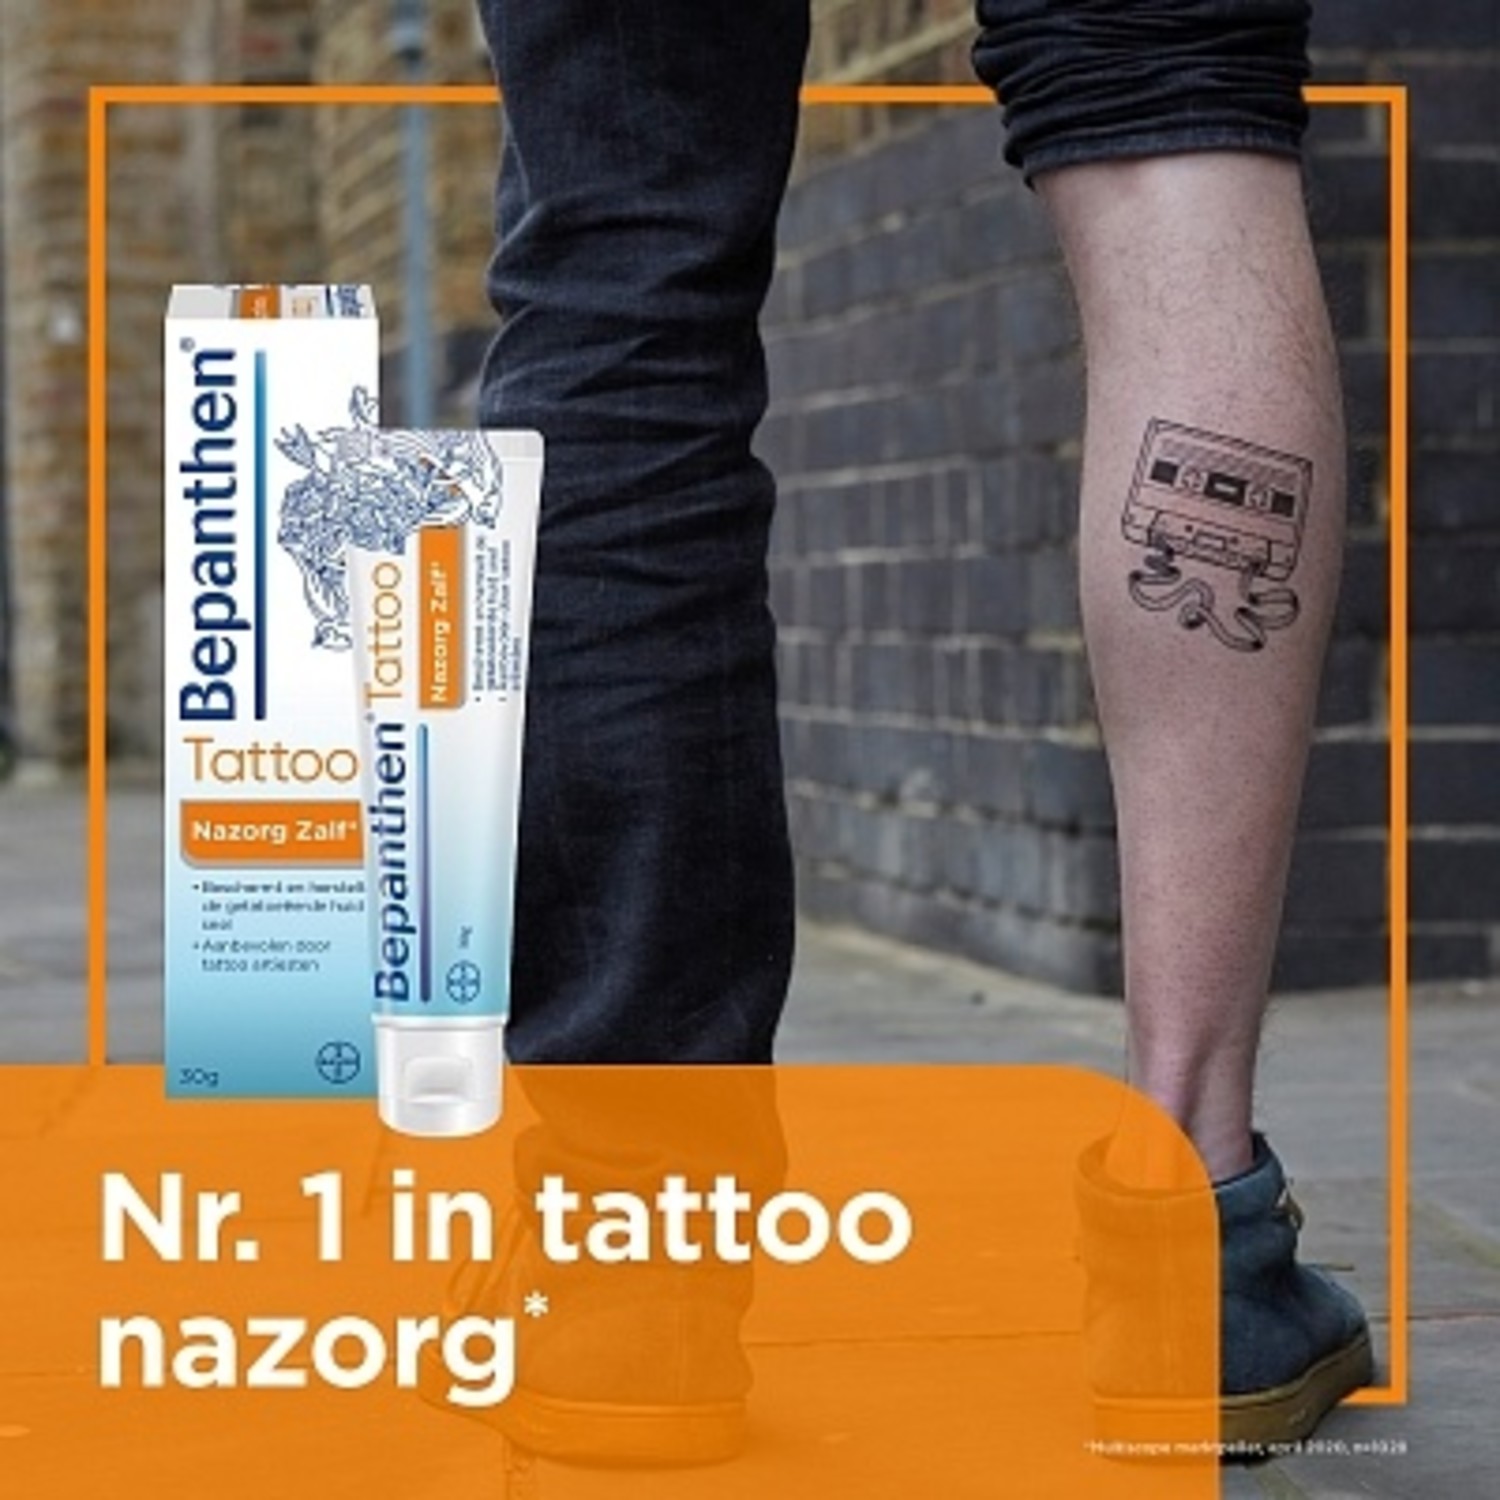 afdeling puree climax Bepanthen Tattoo Nazorg Zalf 30 gram tube - TATTOOGEAR TATTOO-GROOTHANDEL